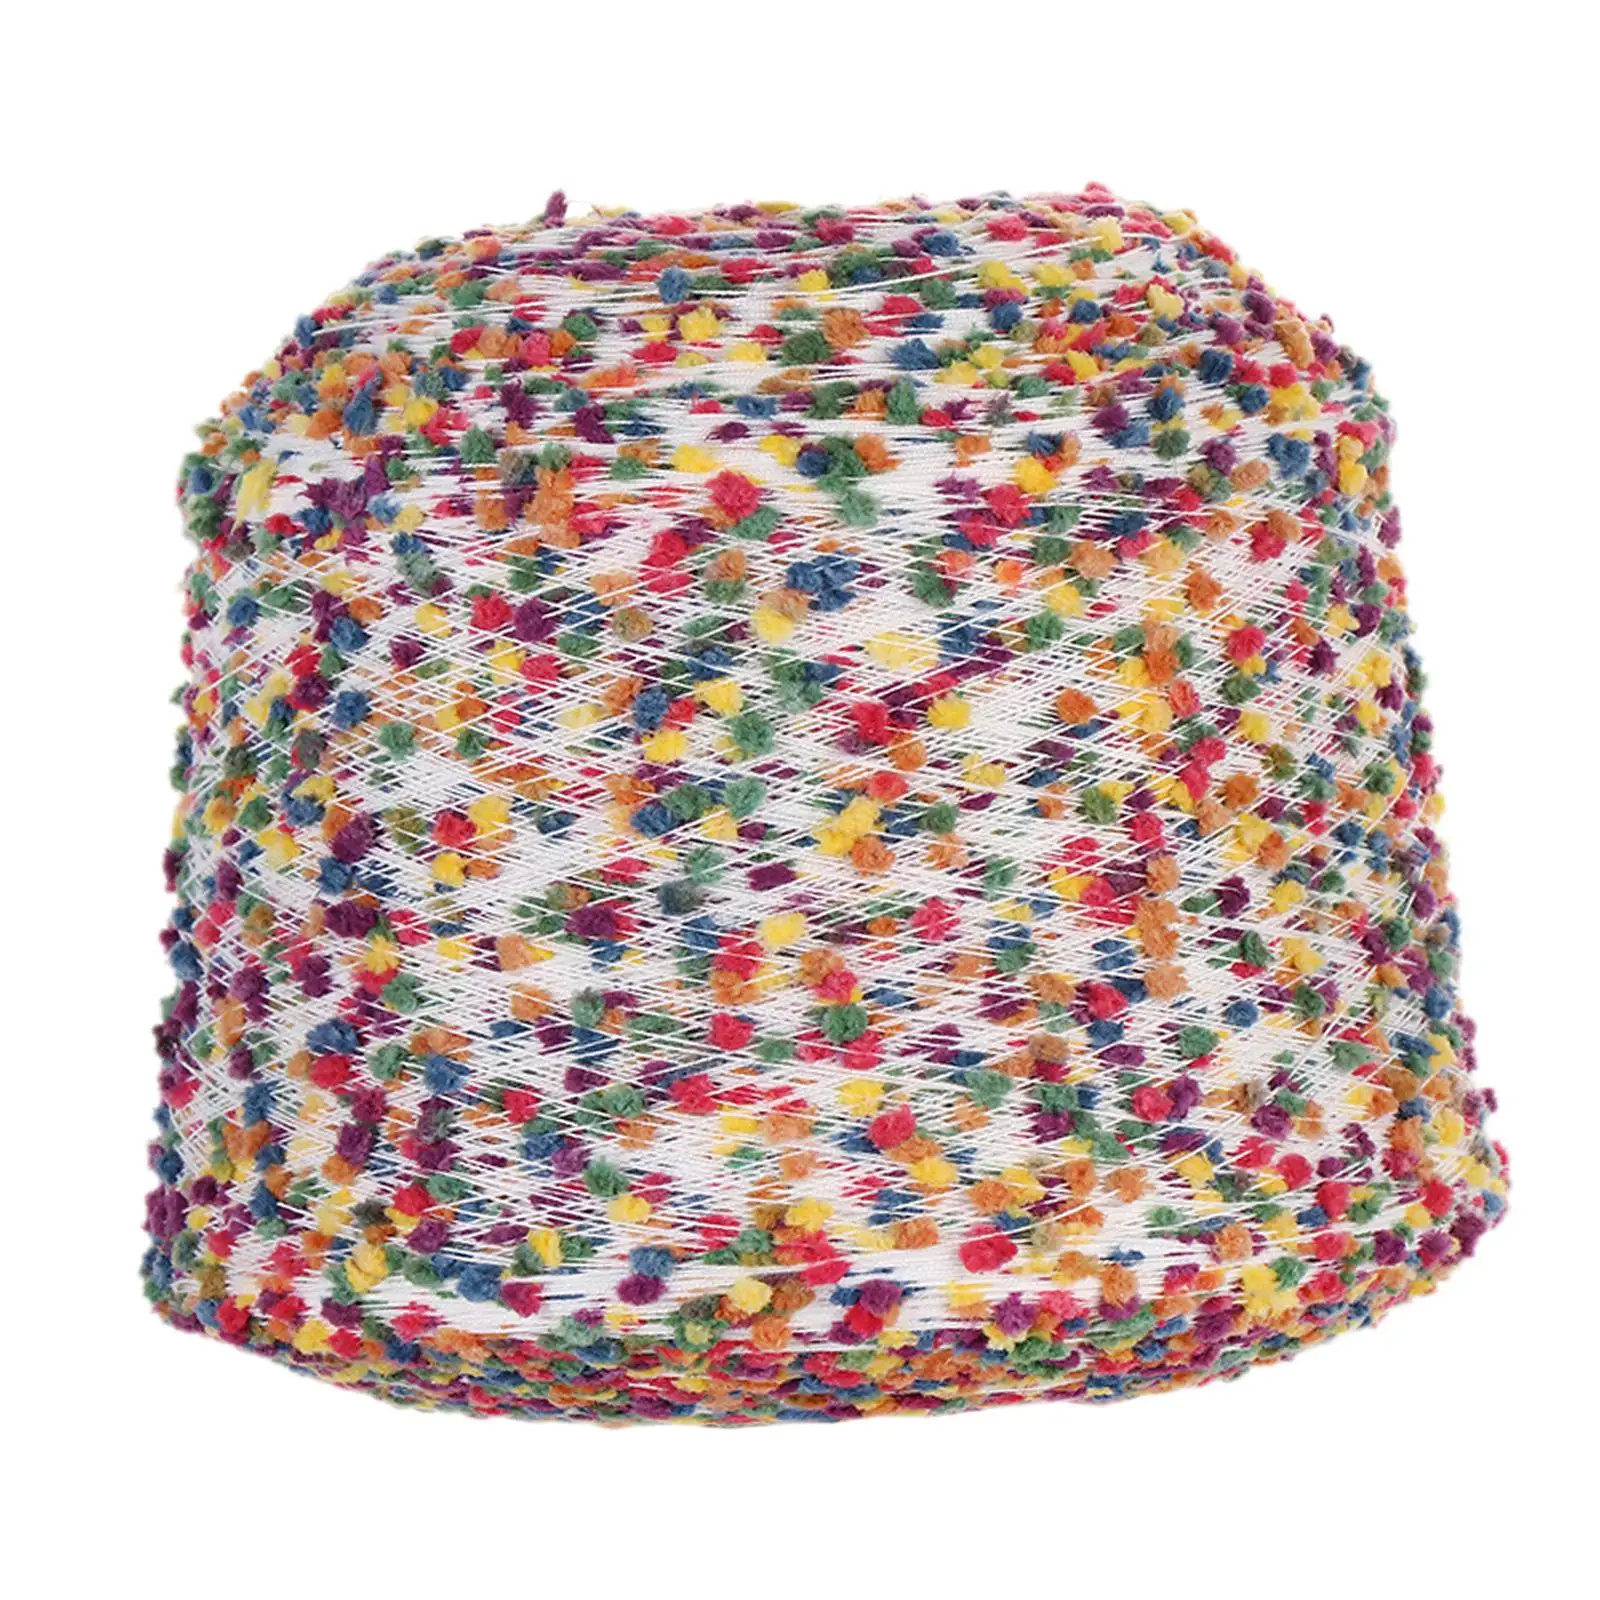 Knitting Yarn DIY Premium Crafts Lightweight Hand Knit Crocheting Making Weaving Yarn for Scarf Clothing Bag Sweater Accessories